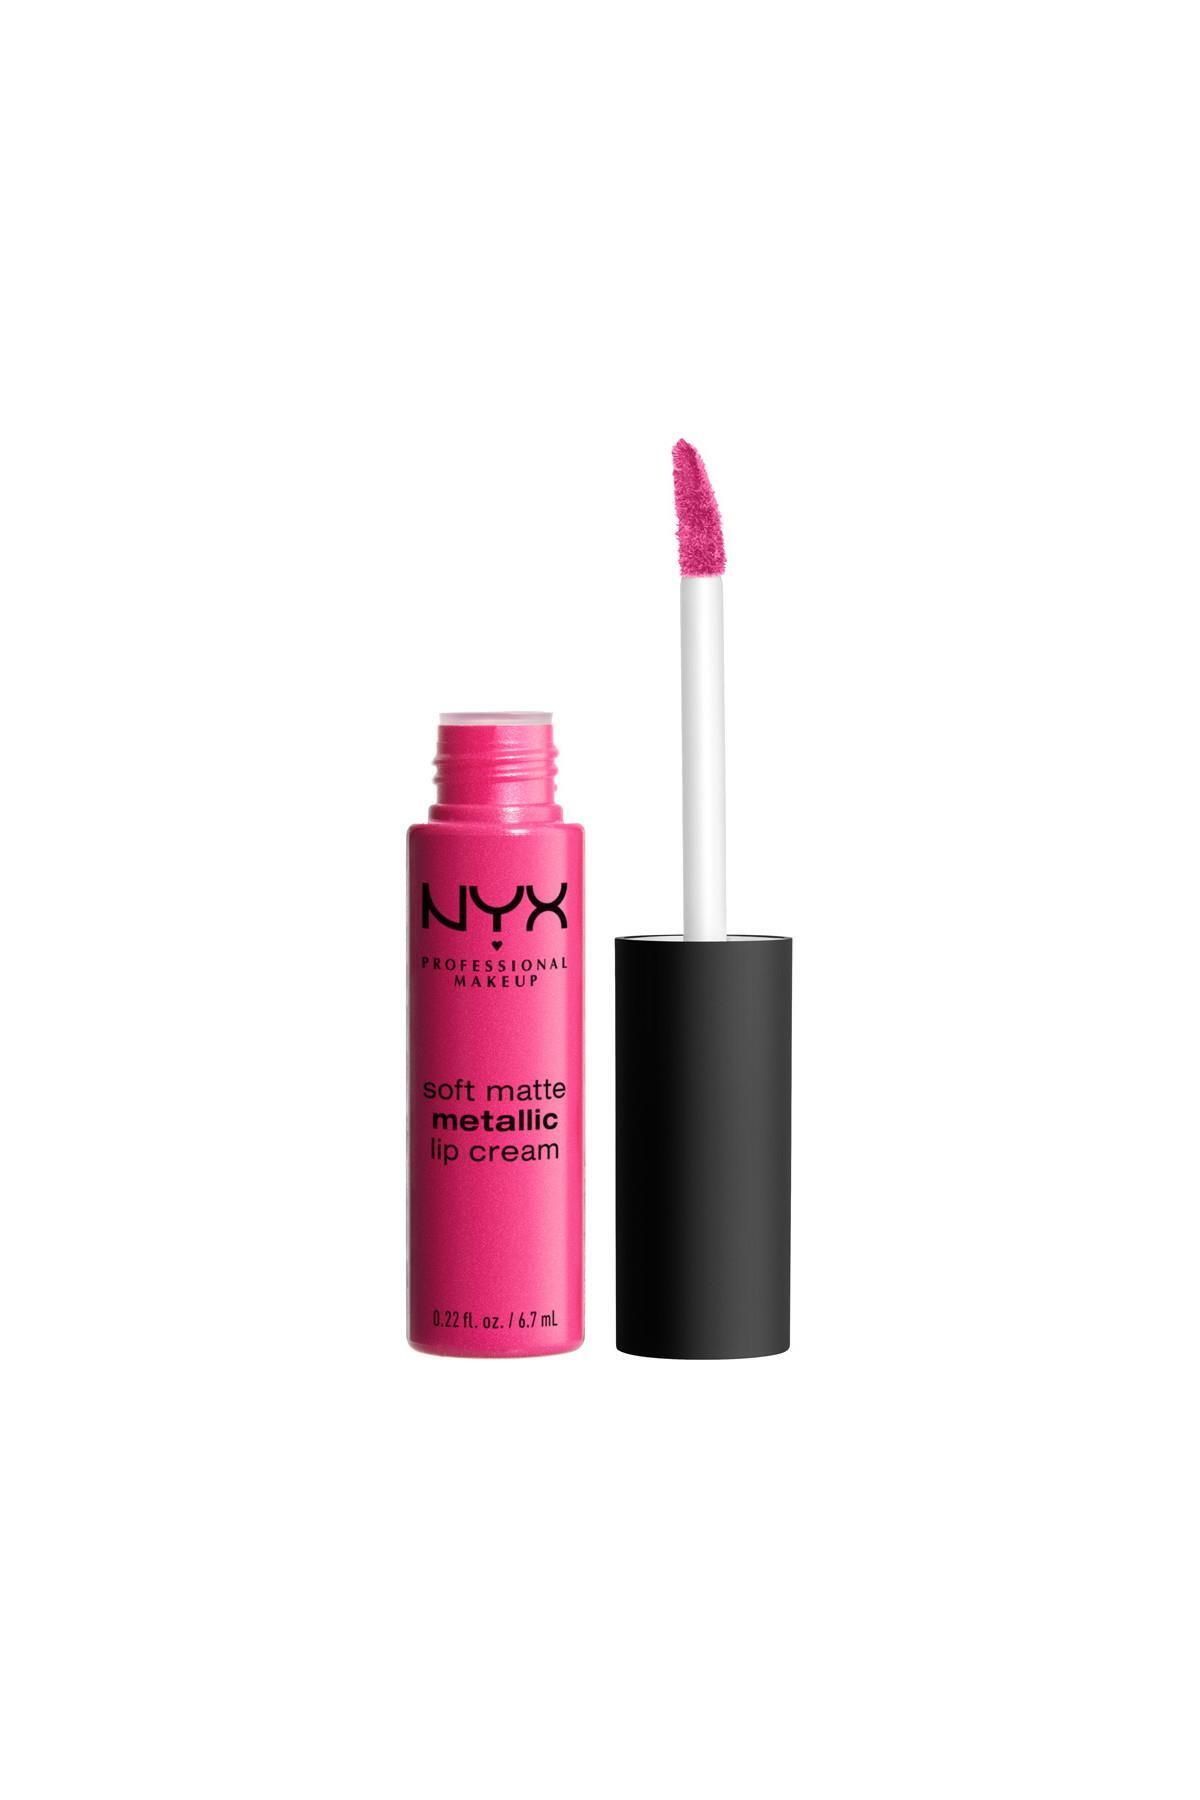 NYX Professional Makeup Soft Matte Metallic Lip Cream Paris